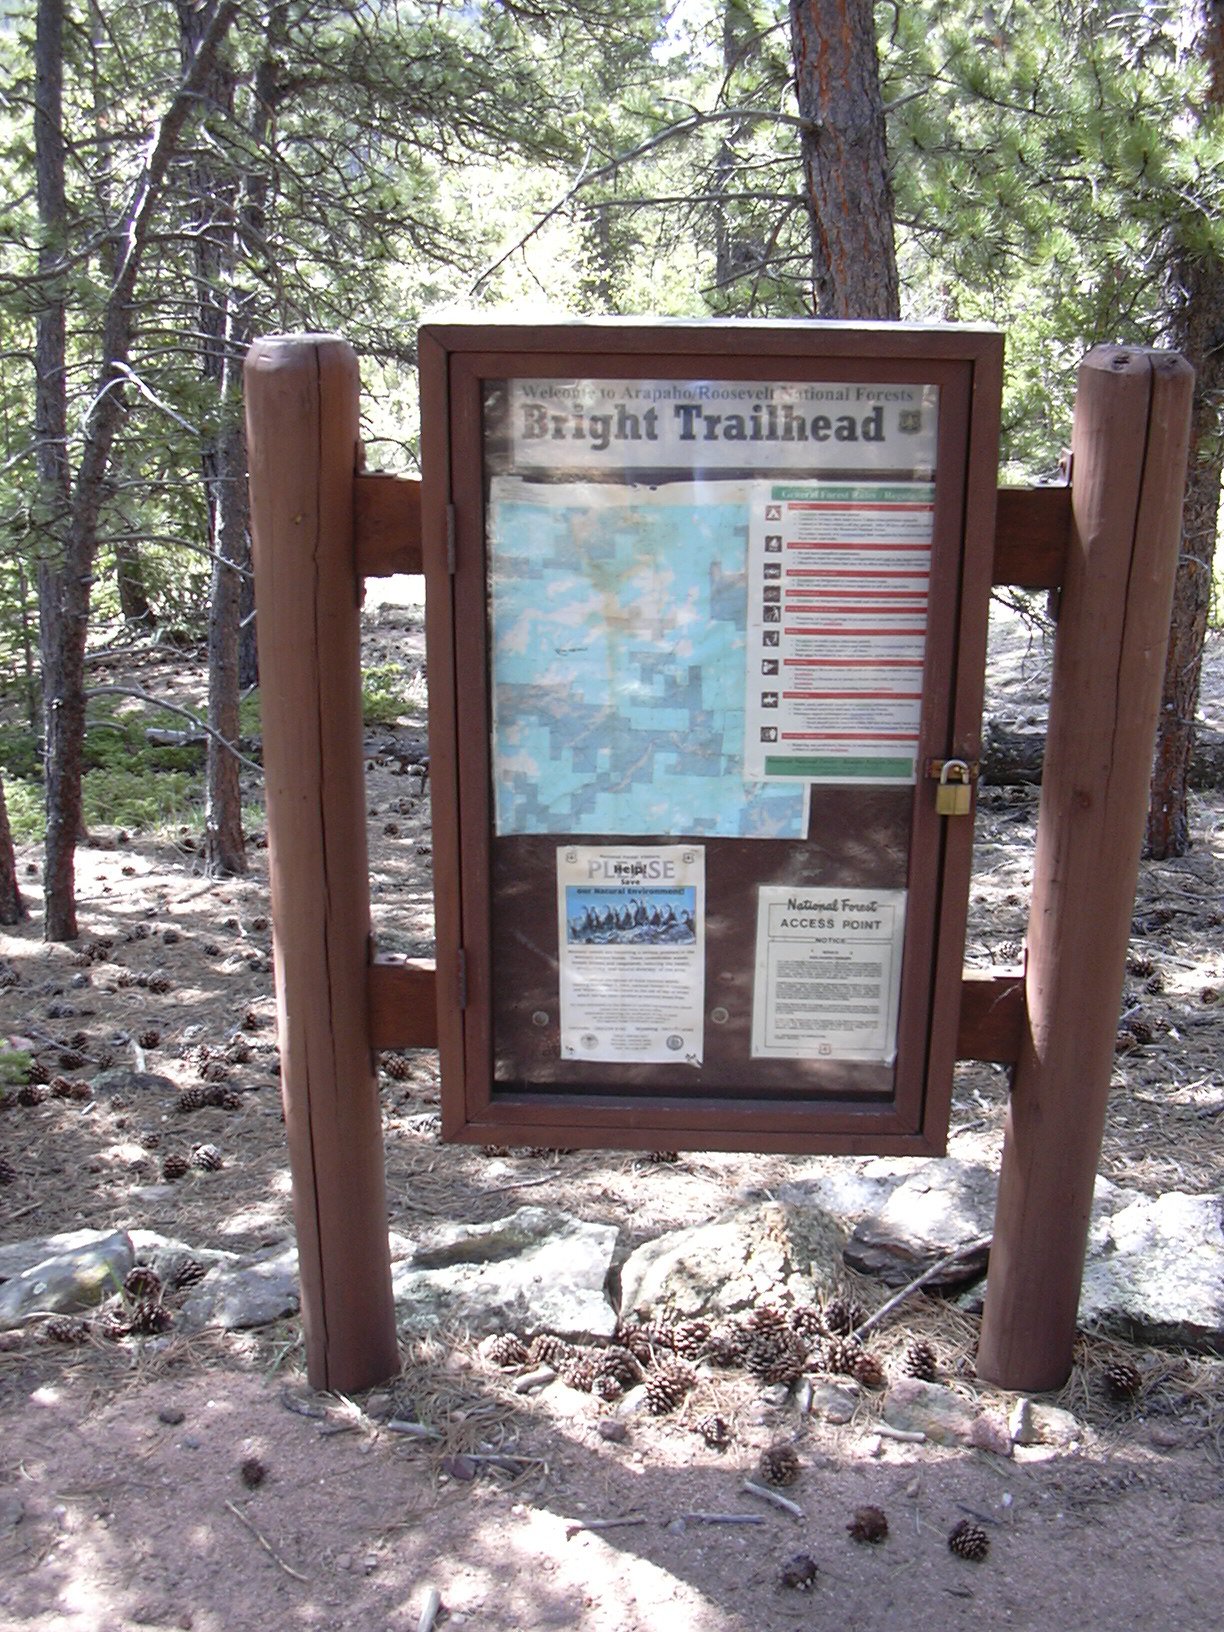 Bright Trail Trailhead sign, 05/24/08